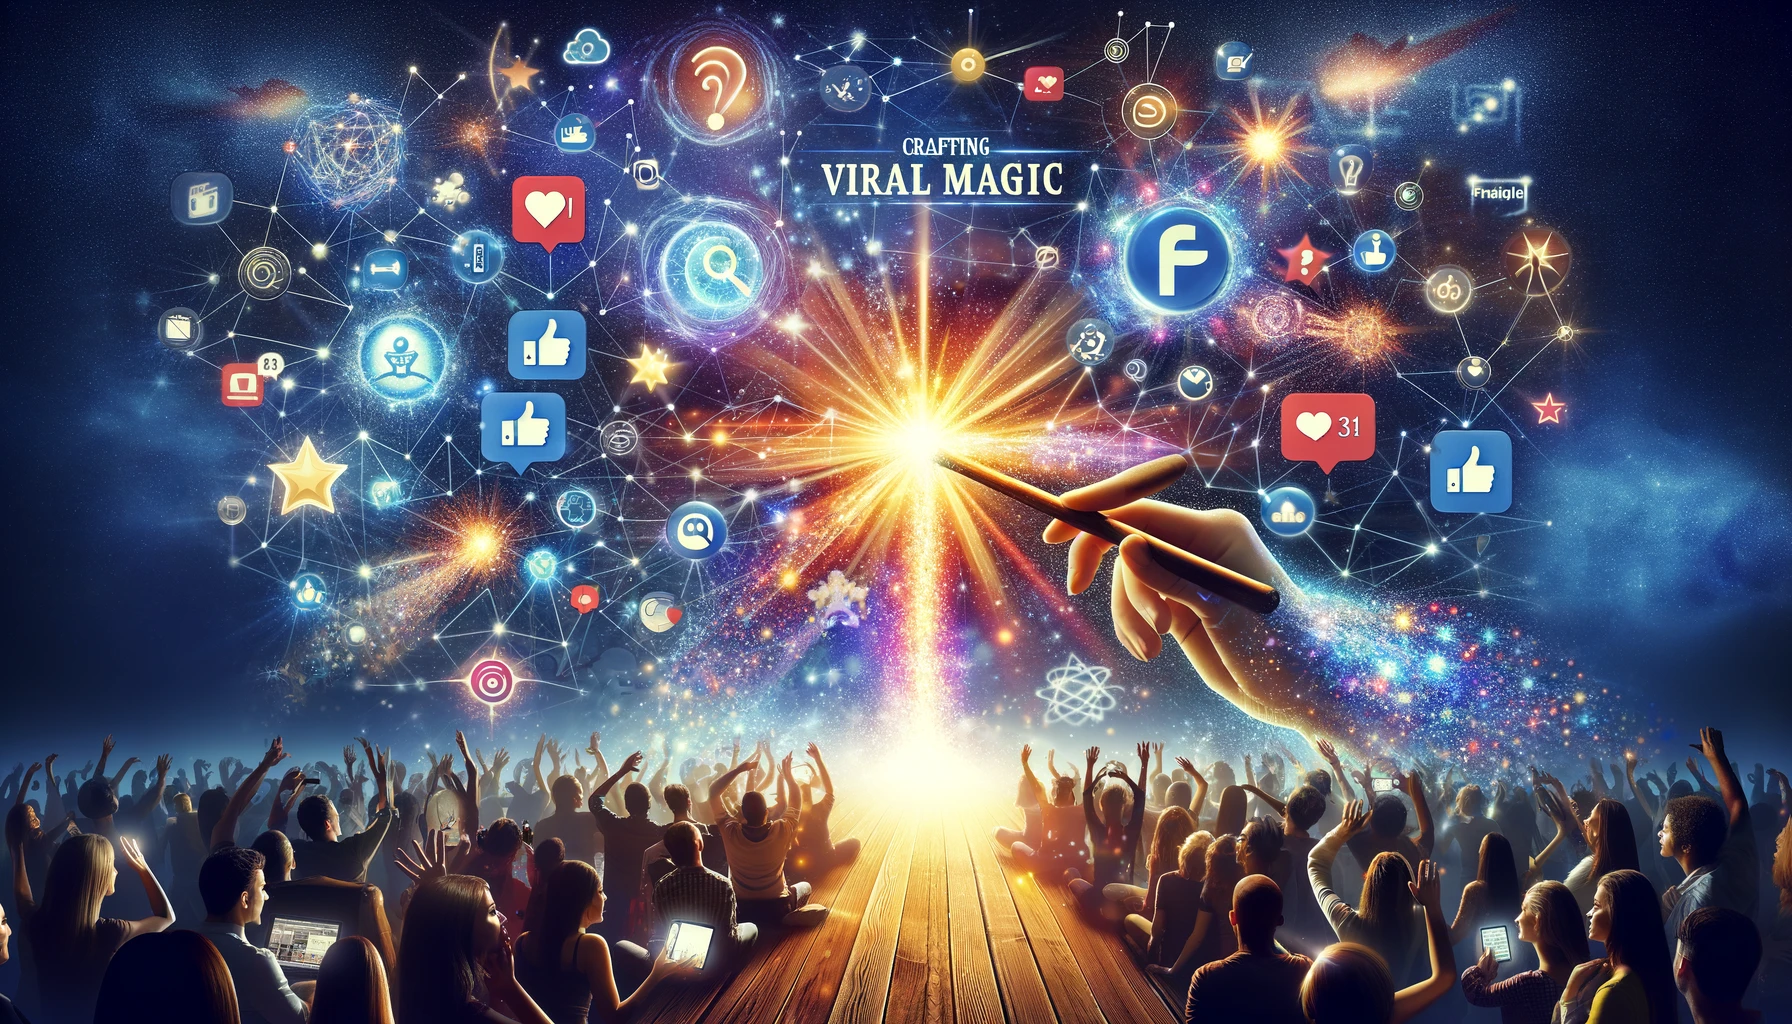 Illustration of Crafting Viral Magic with a magic wand activating social media engagement.